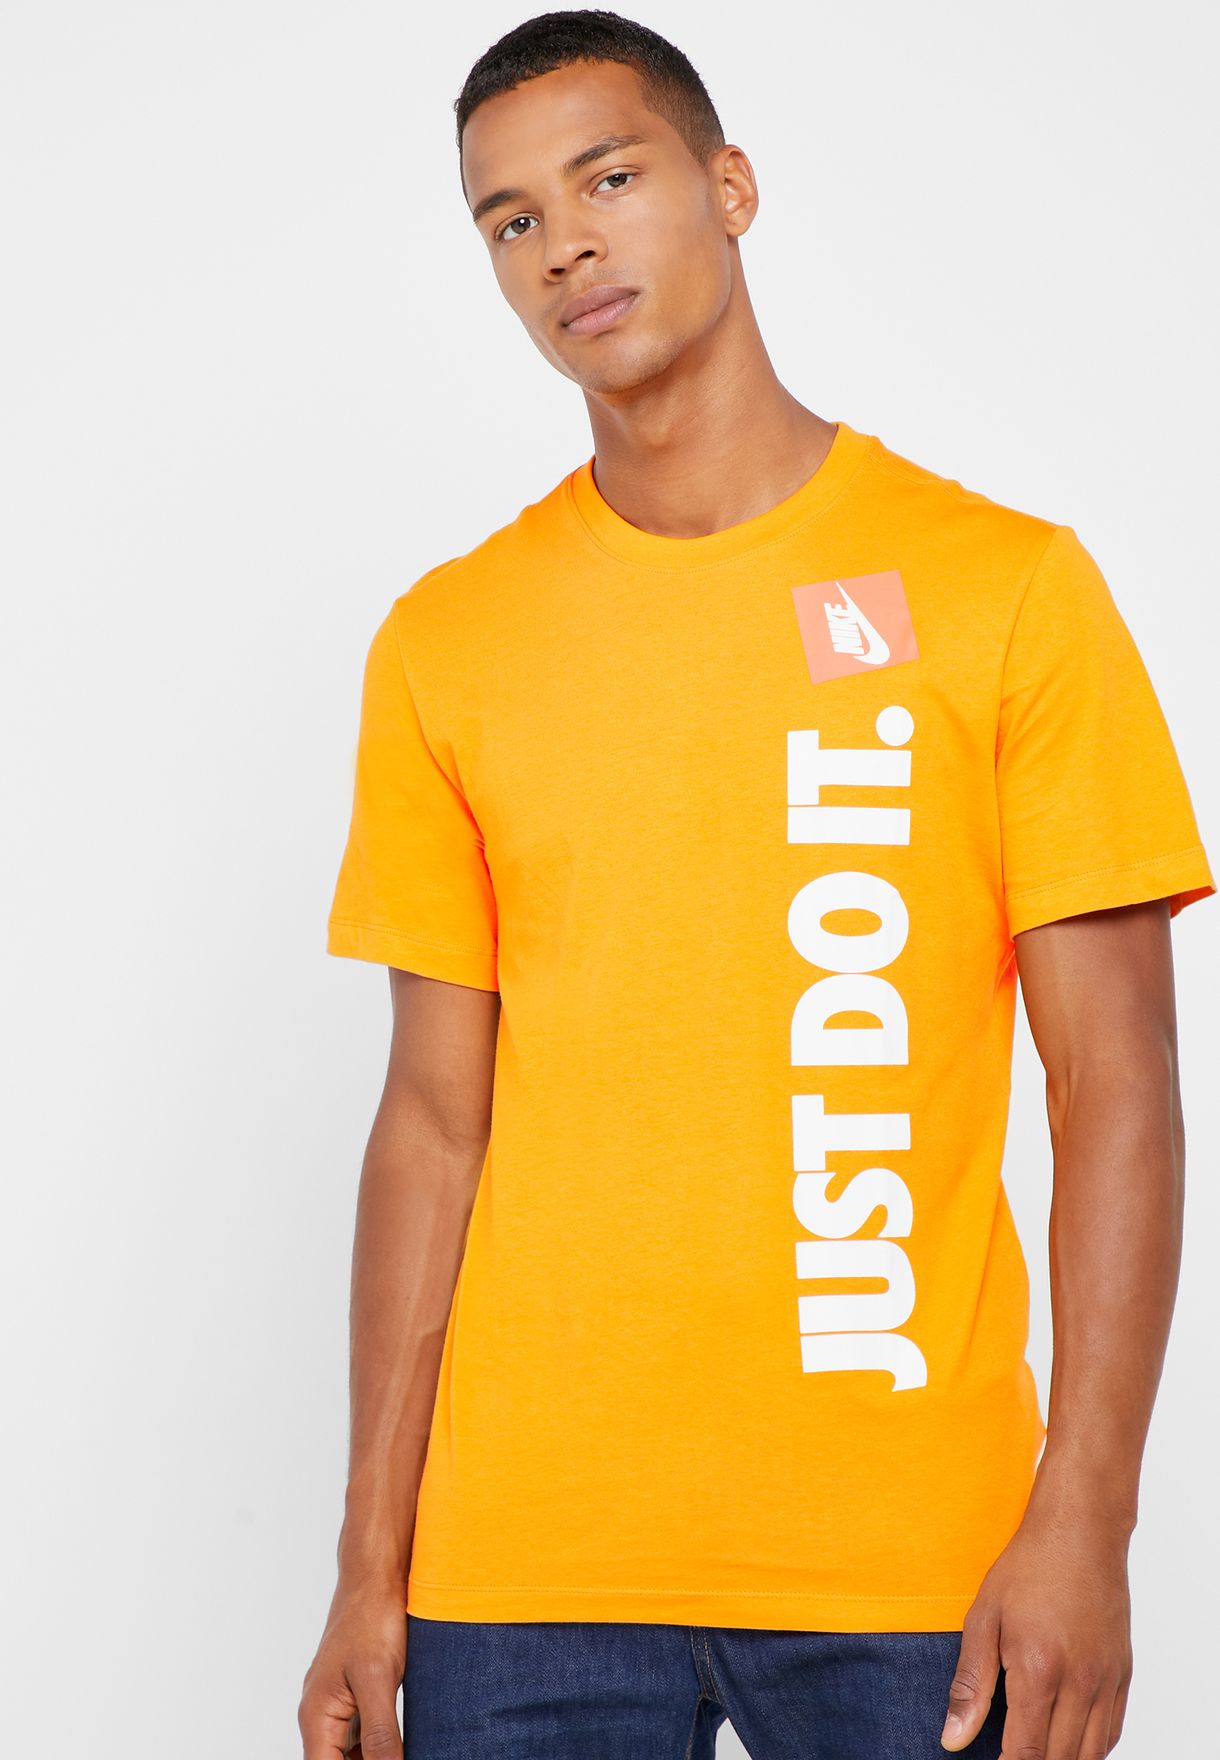 orange just do it shirt